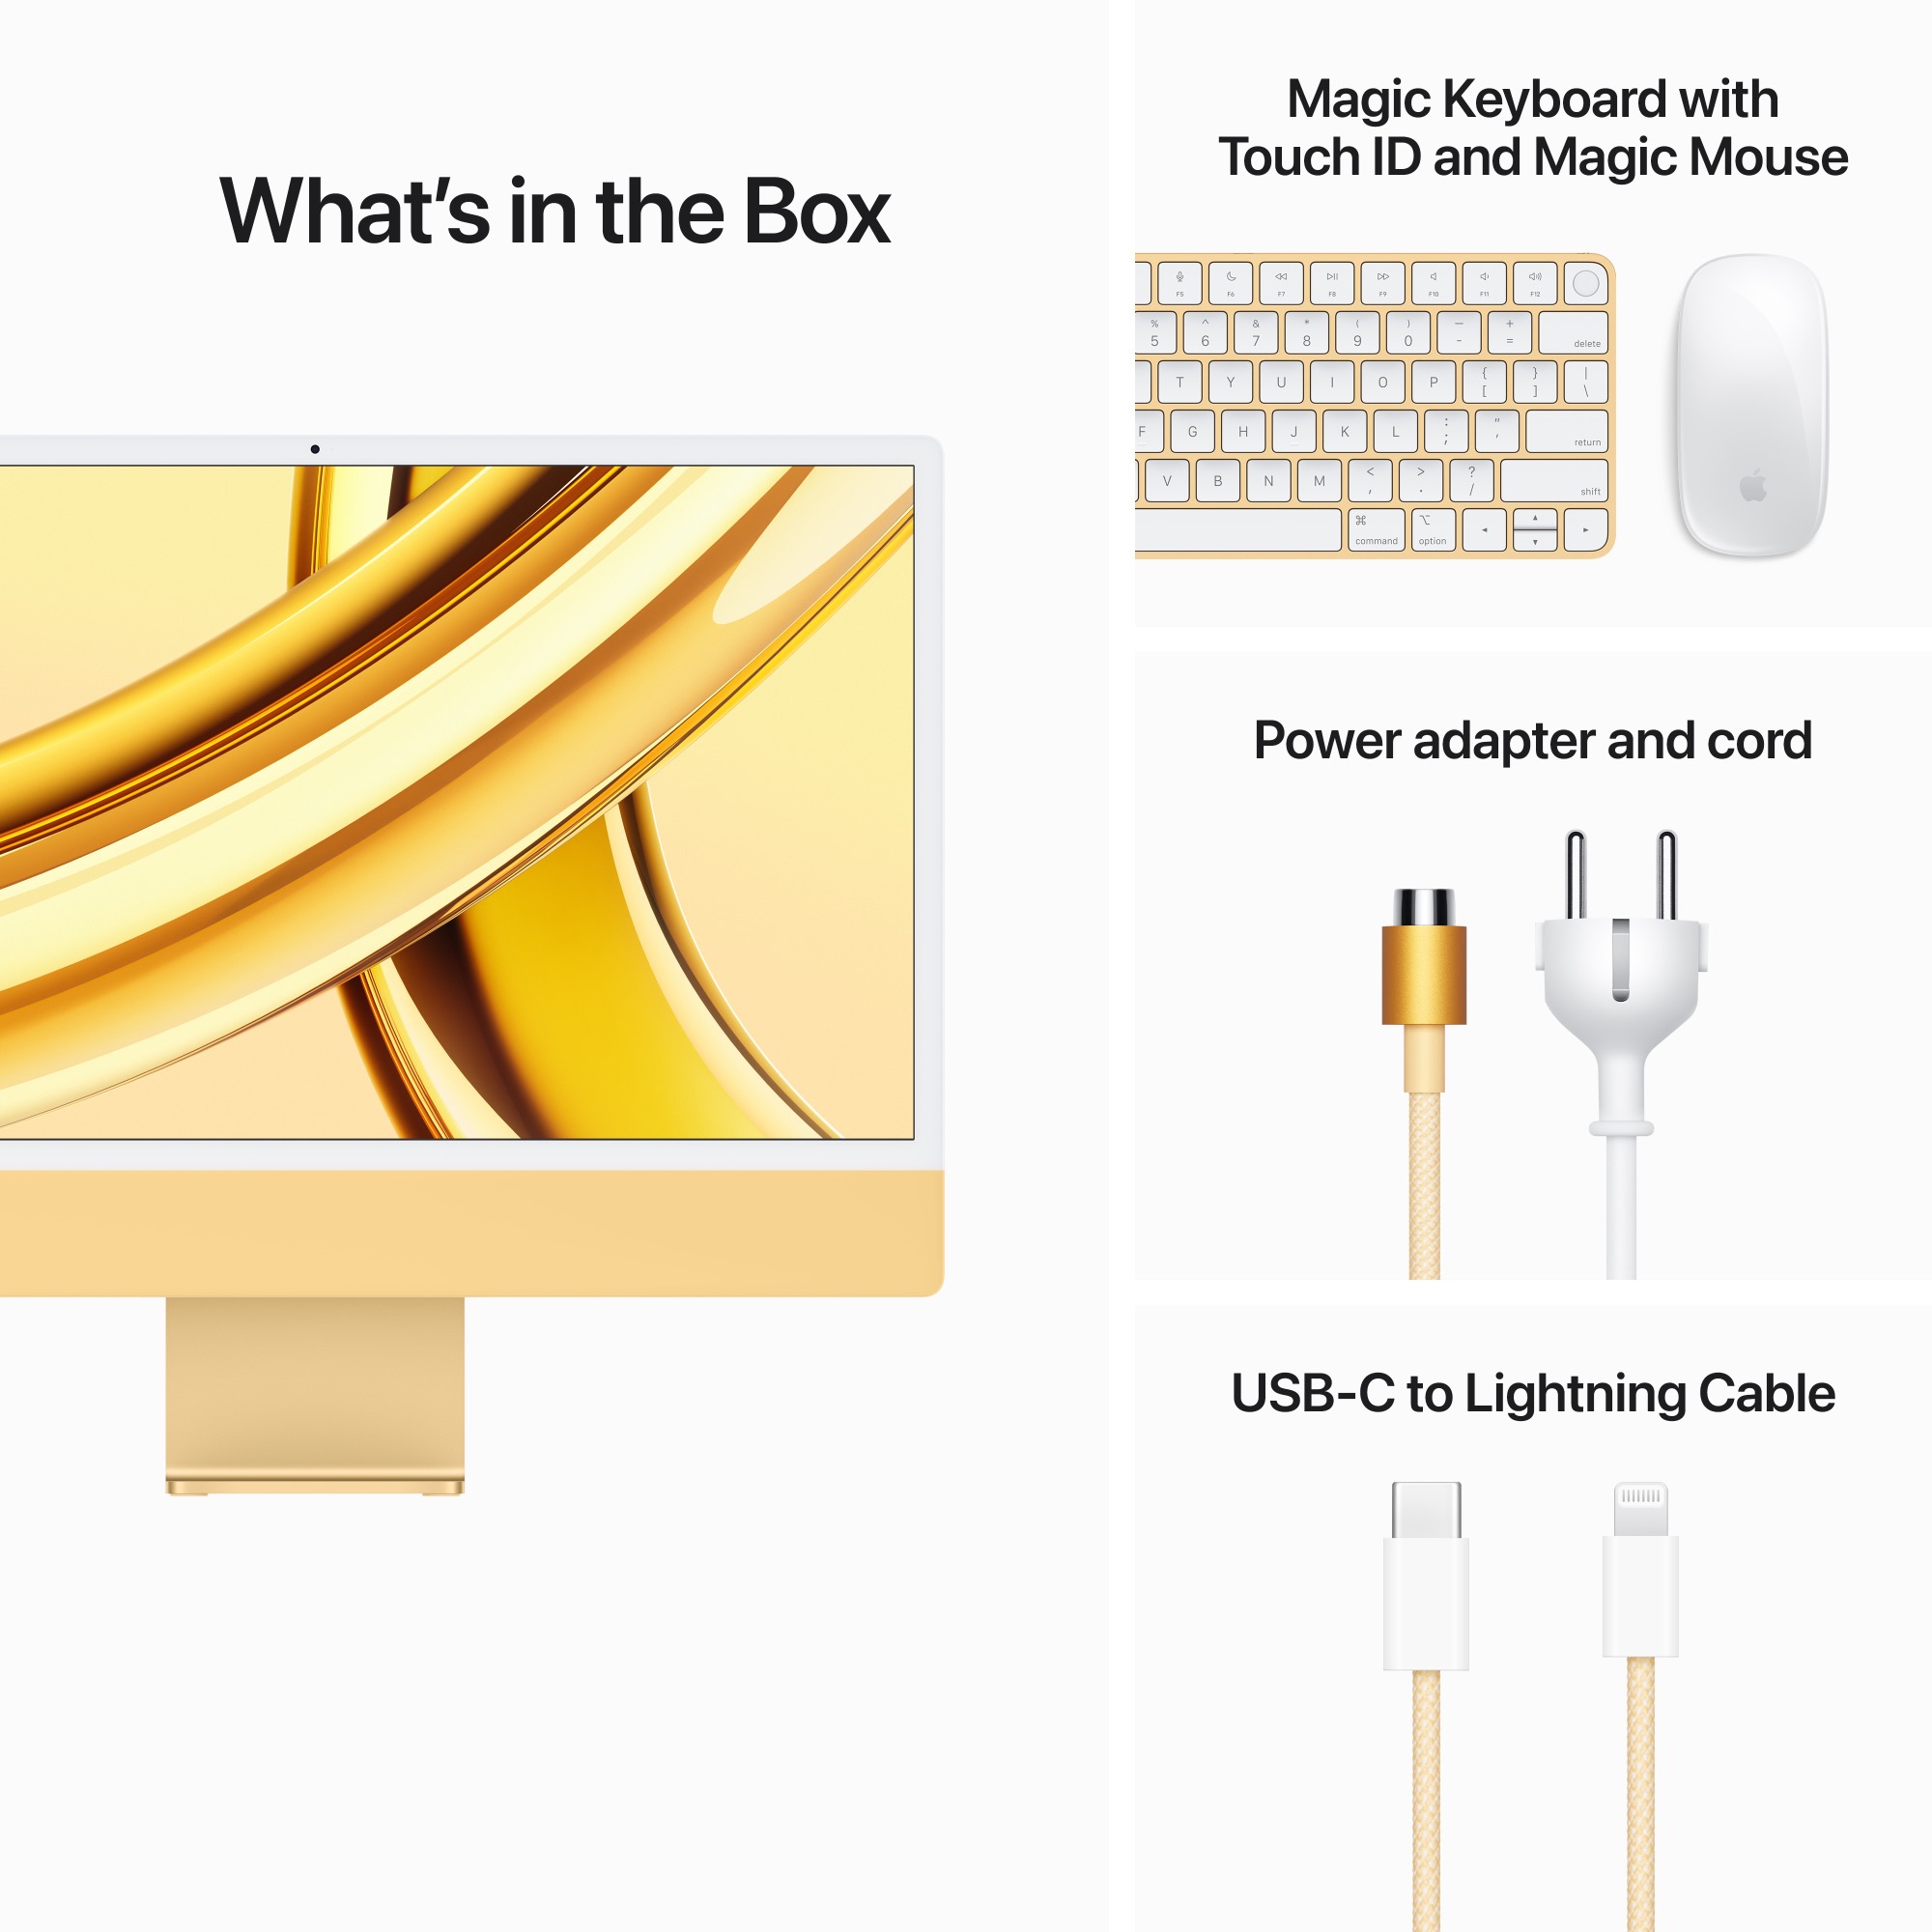 24-inch iMac 4.5K Retina kijelzővel, M3 chippel, 8 magos CPU, 10 magos GPU, 256GB SSD - sárga